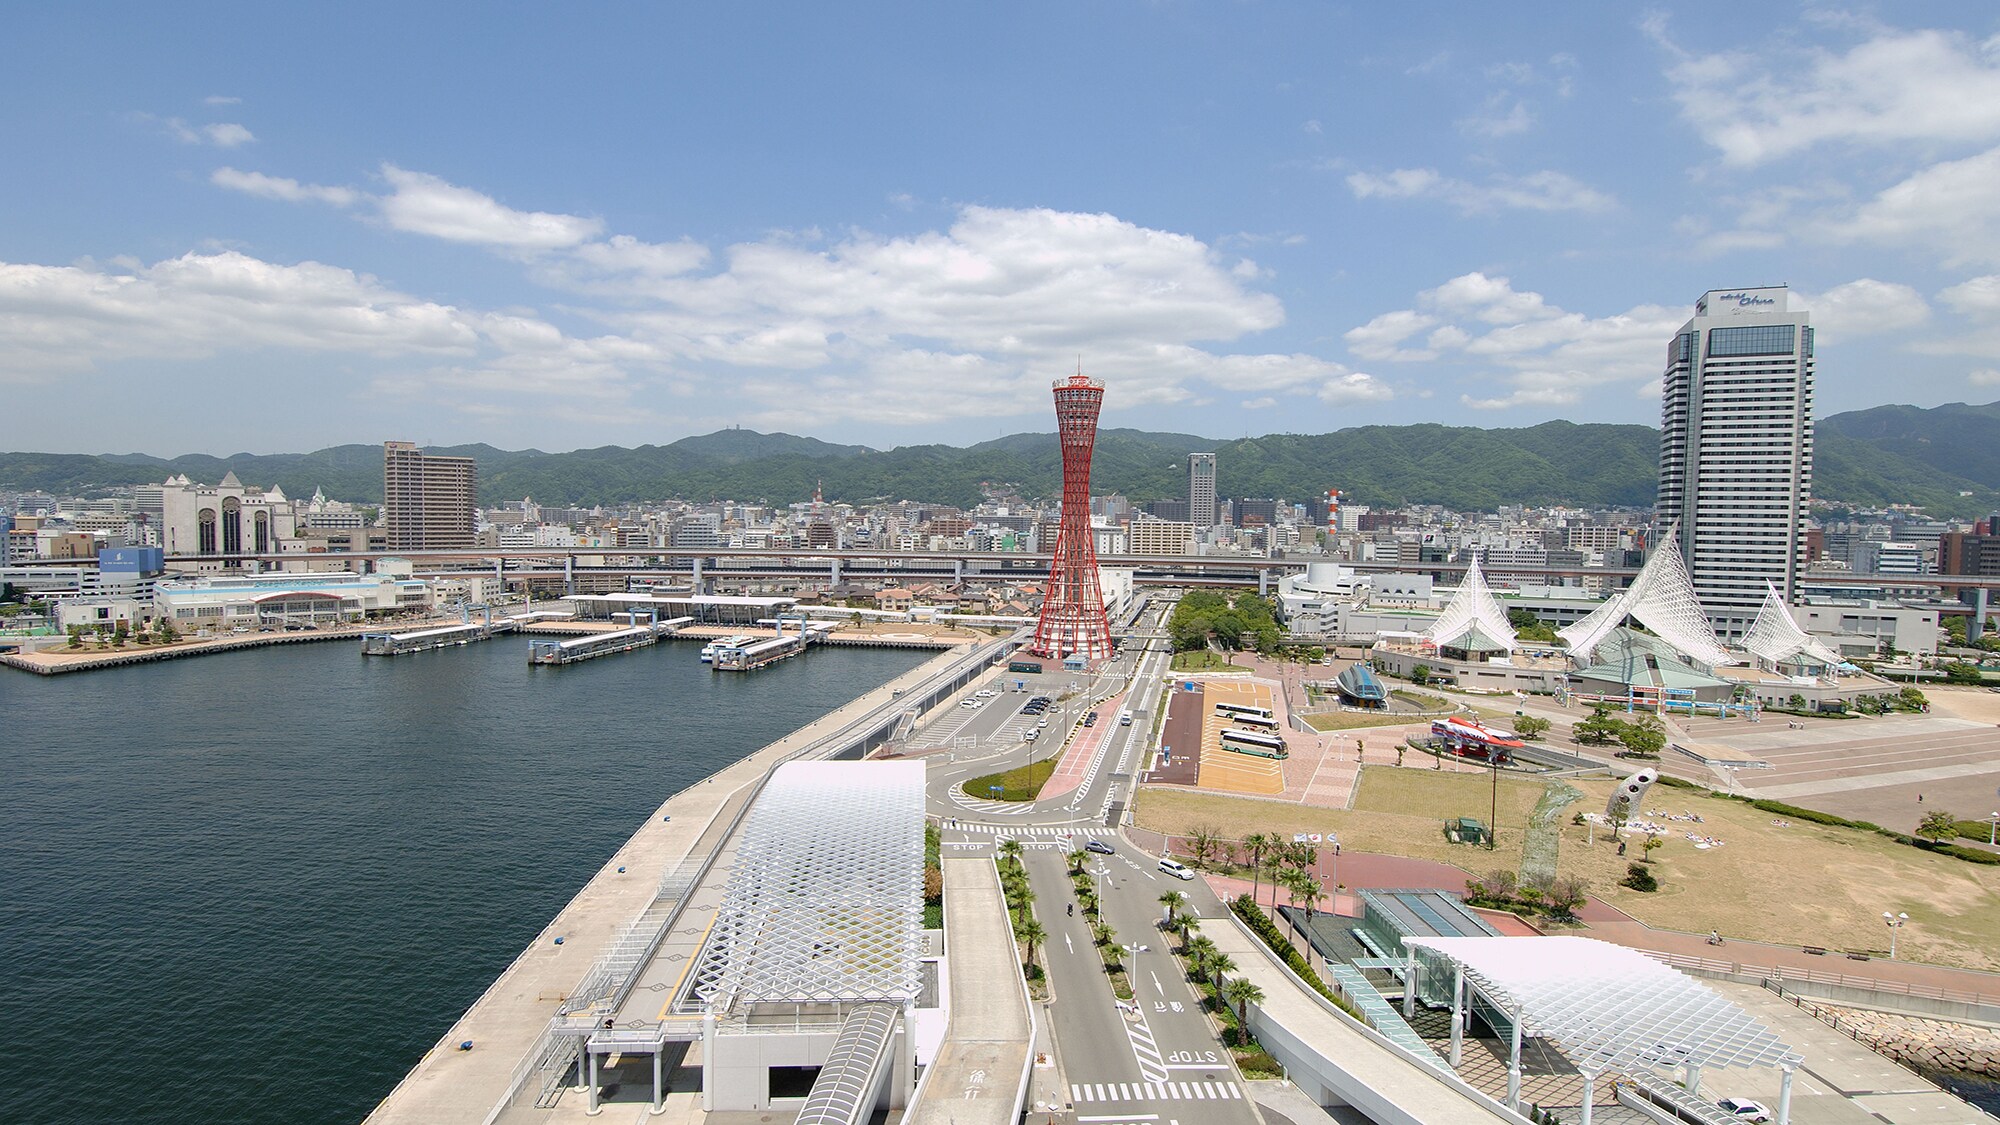 ◆ Kobe Harborland ◆